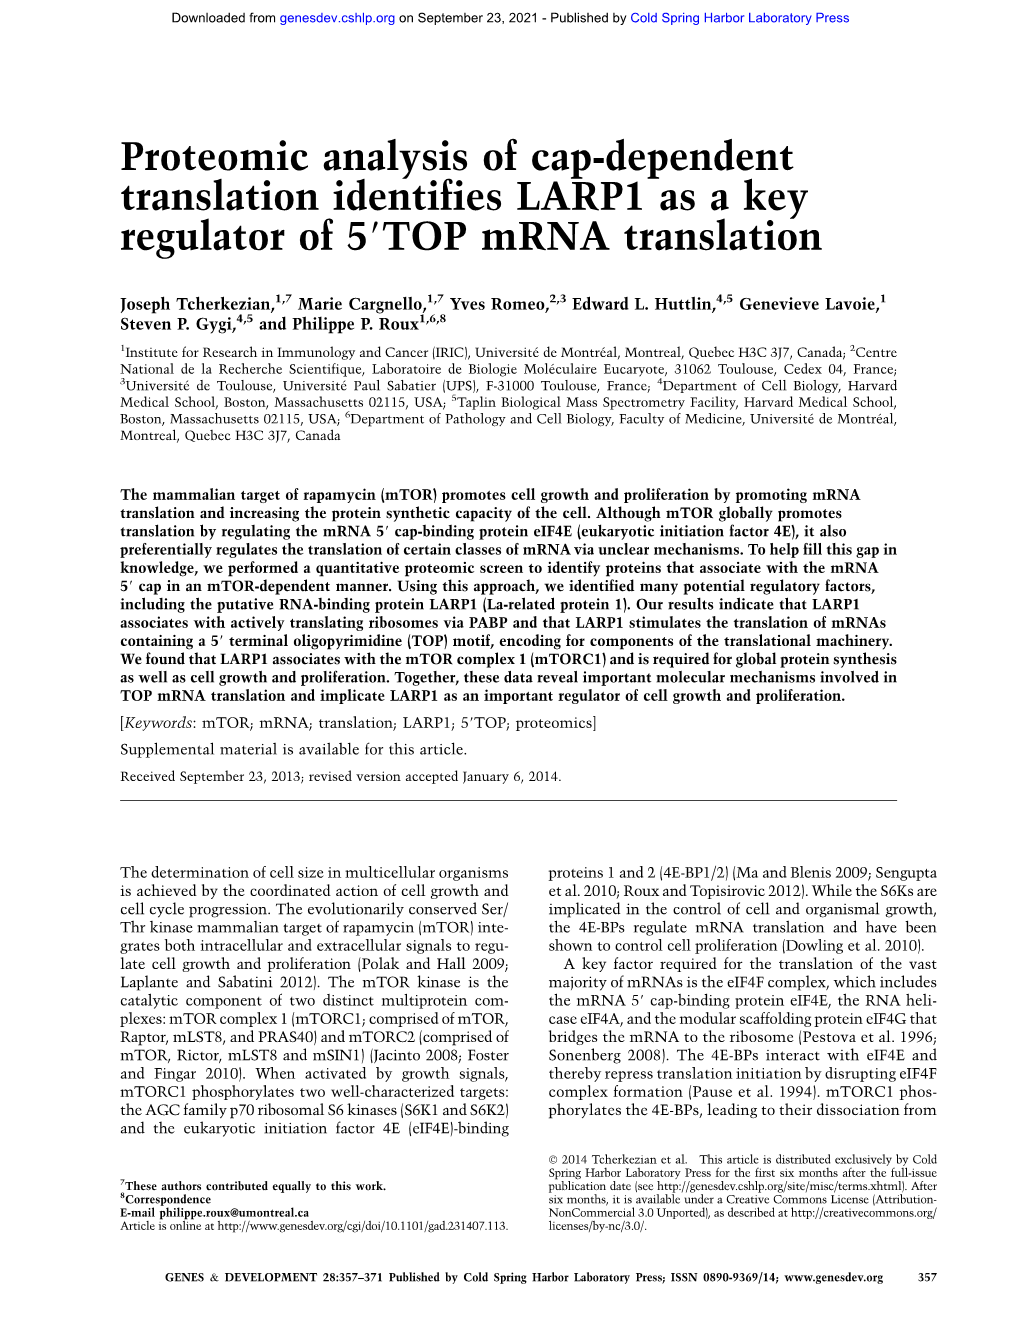 Proteomic Analysis of Cap-Dependent Translation Identifies LARP1 As a Key Regulator of 59TOP Mrna Translation